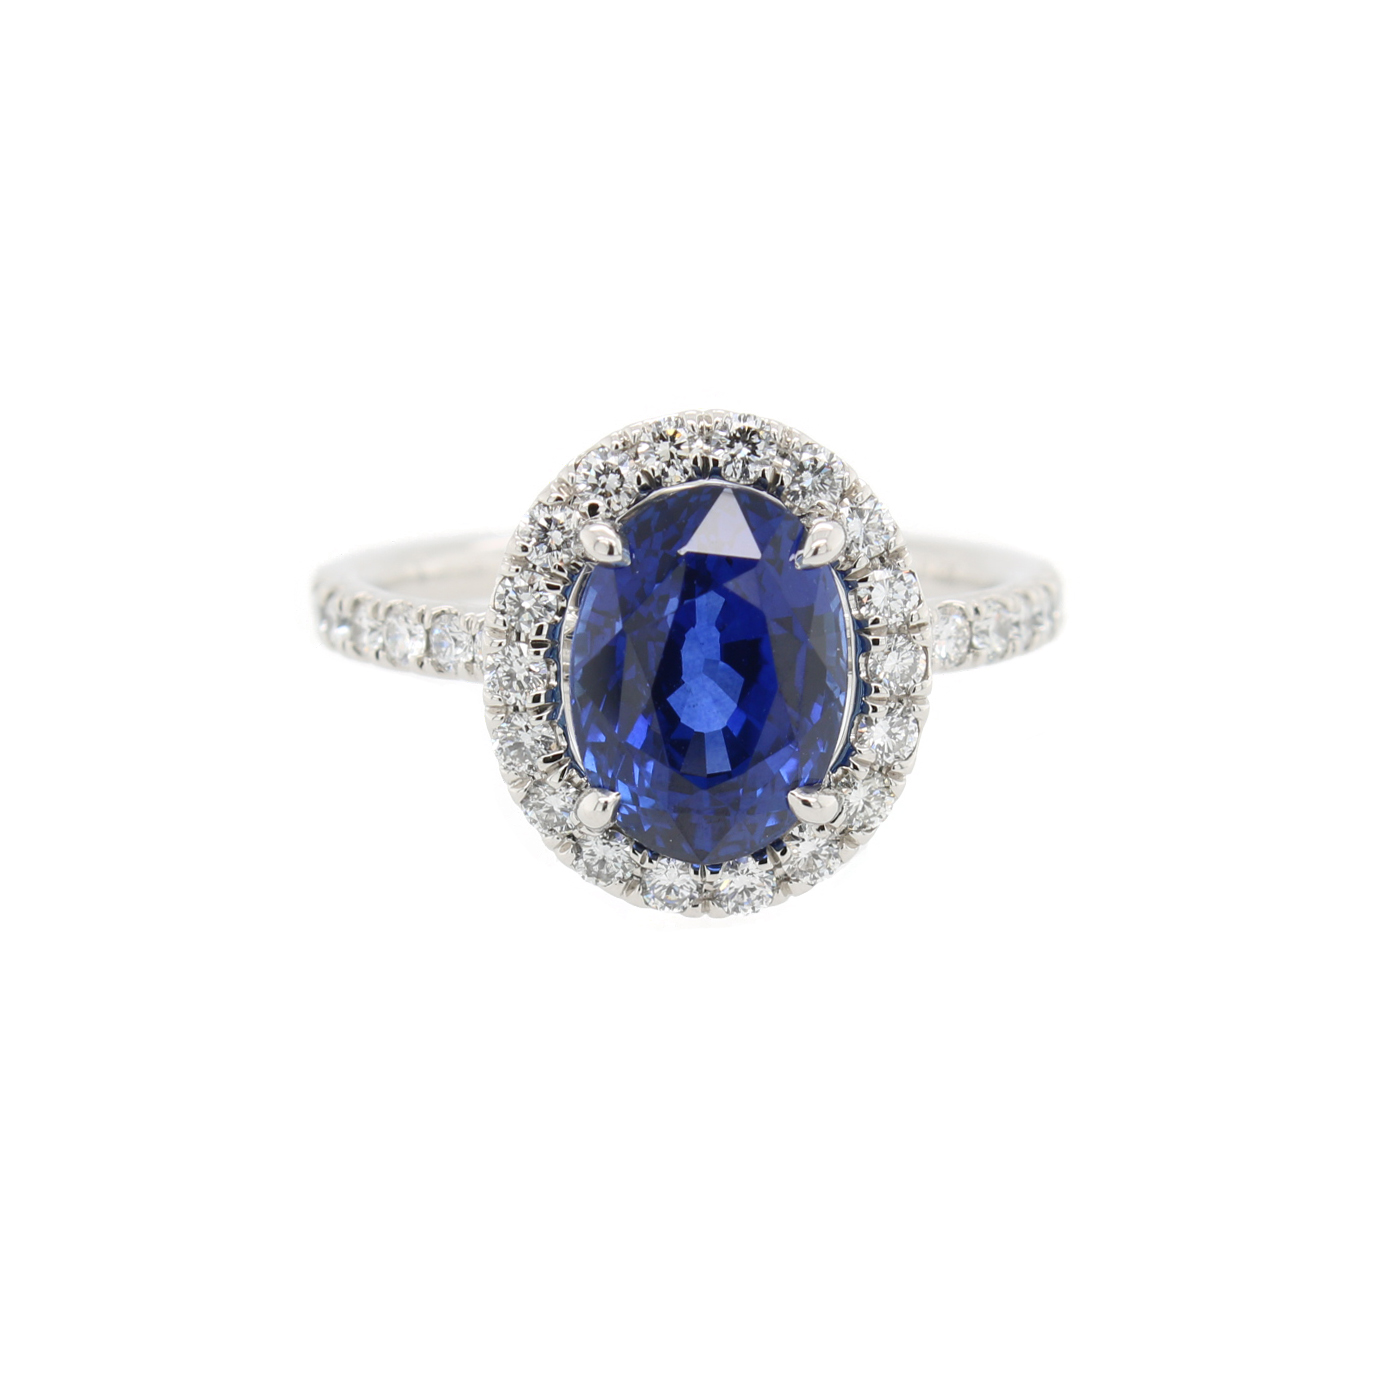 040784Oval-Shaped-Diamond-Halo-and-Sapphire-Ring.jpg